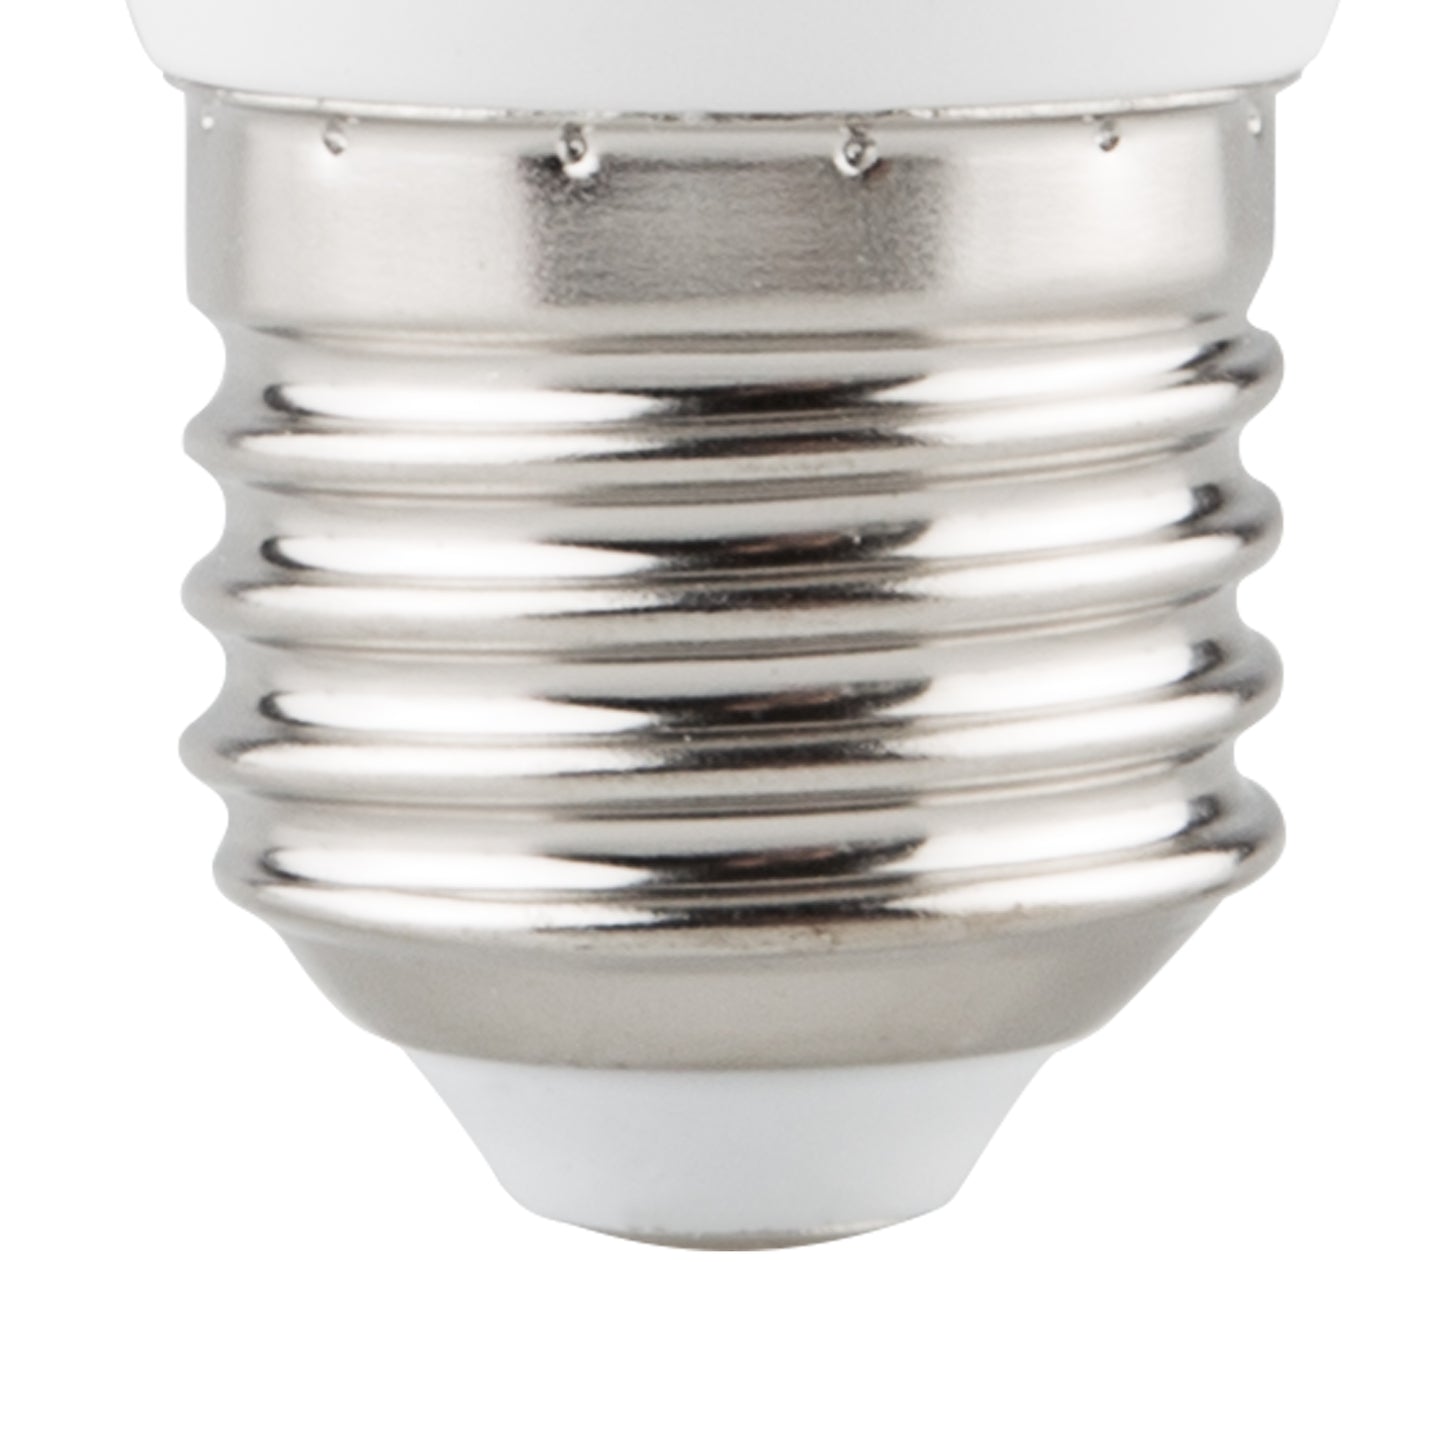 LAMPE REFLECTEUR LED MATEL SAMSUNG E27 R63 9W